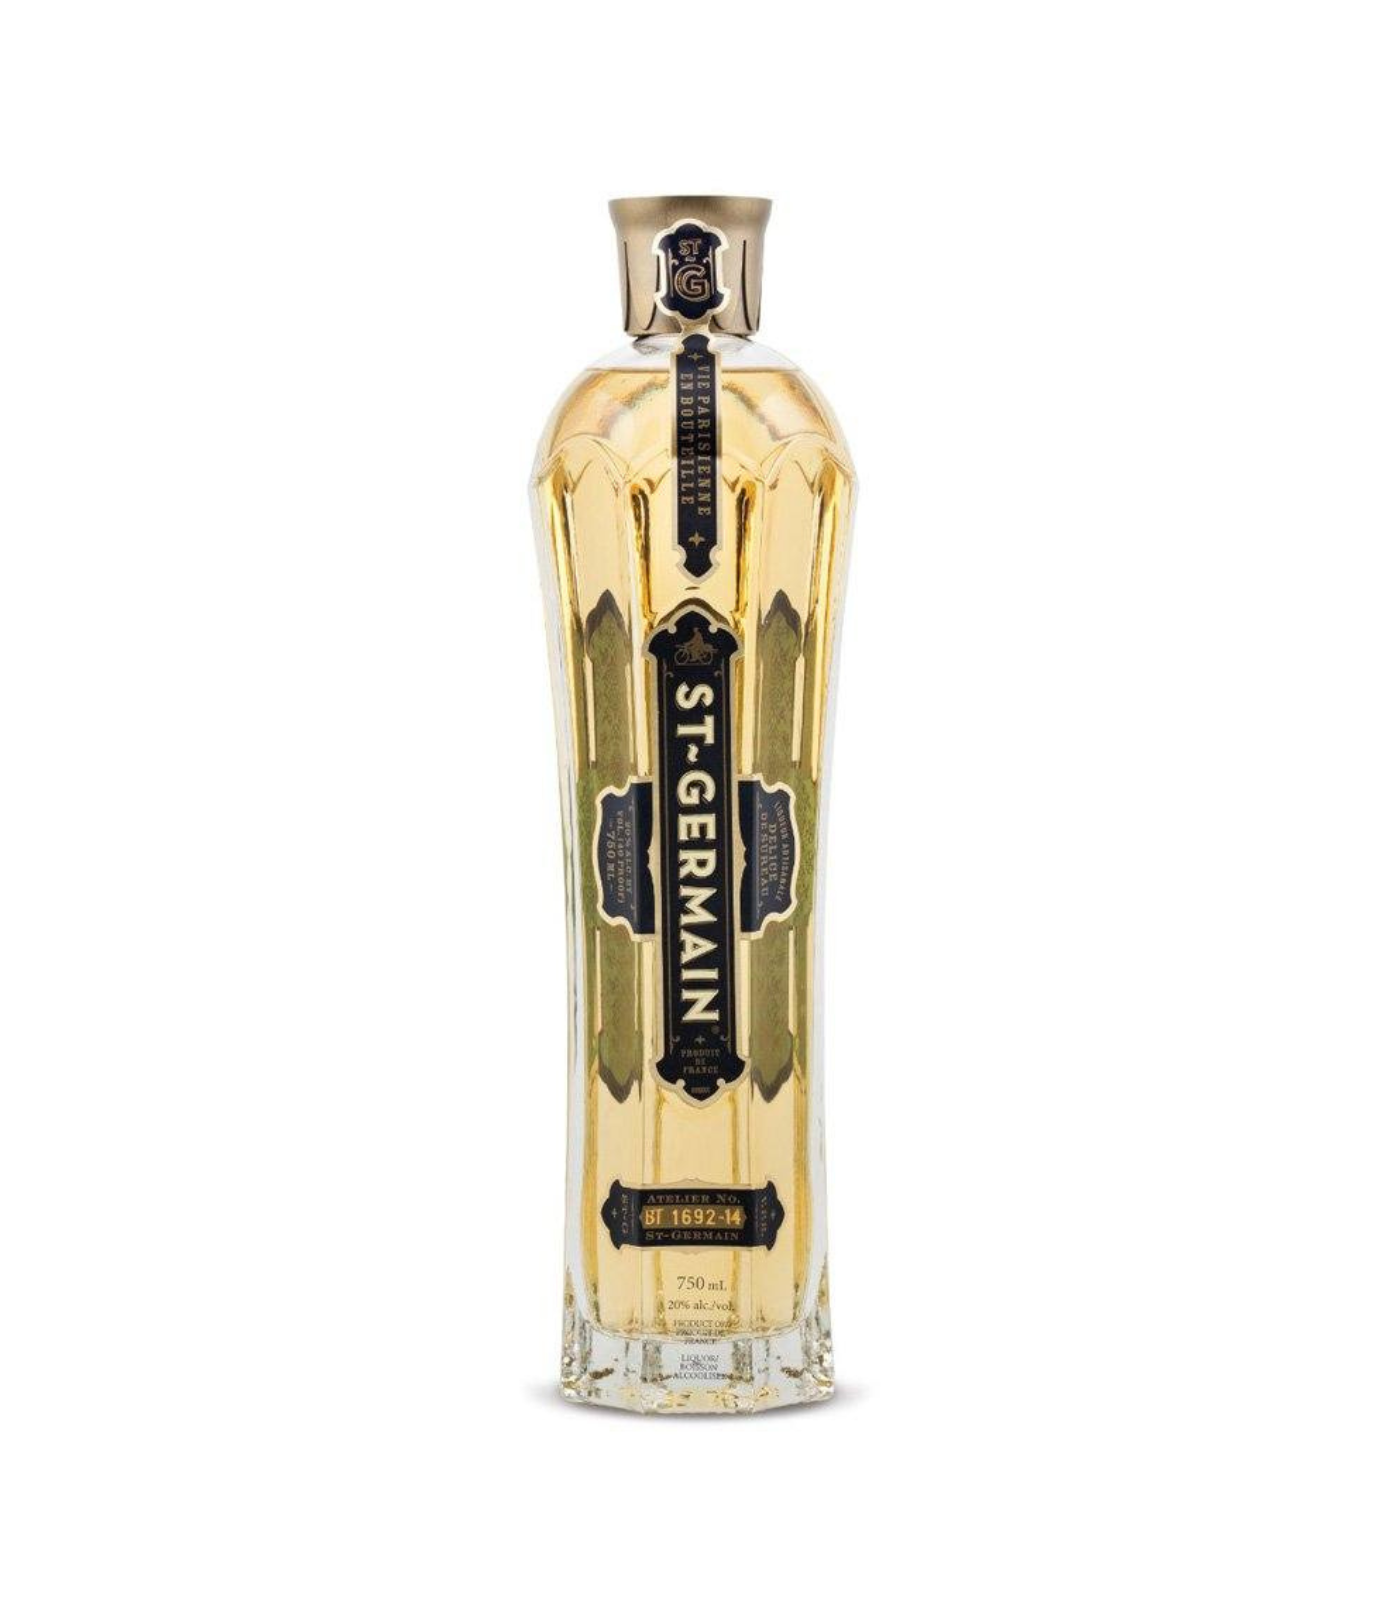 St-Germain Elderflower | French Liqueur 700ml